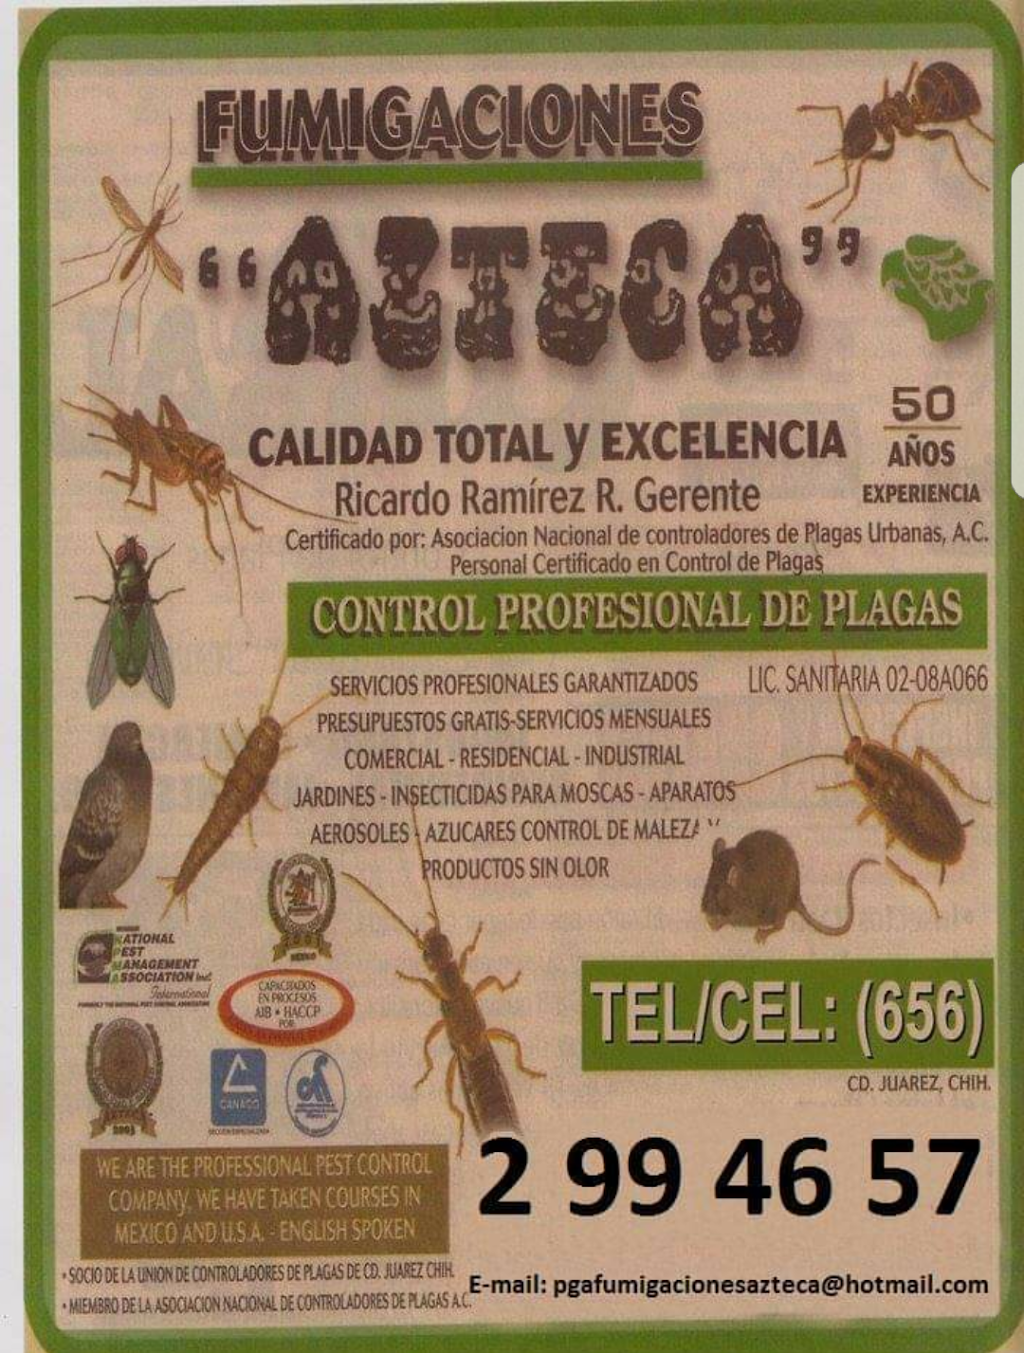 Fumigaciones Azteca | C. Cholula, Hidalgo, 32300 Cd Juárez, Chih., Mexico | Phone: 656 299 4657